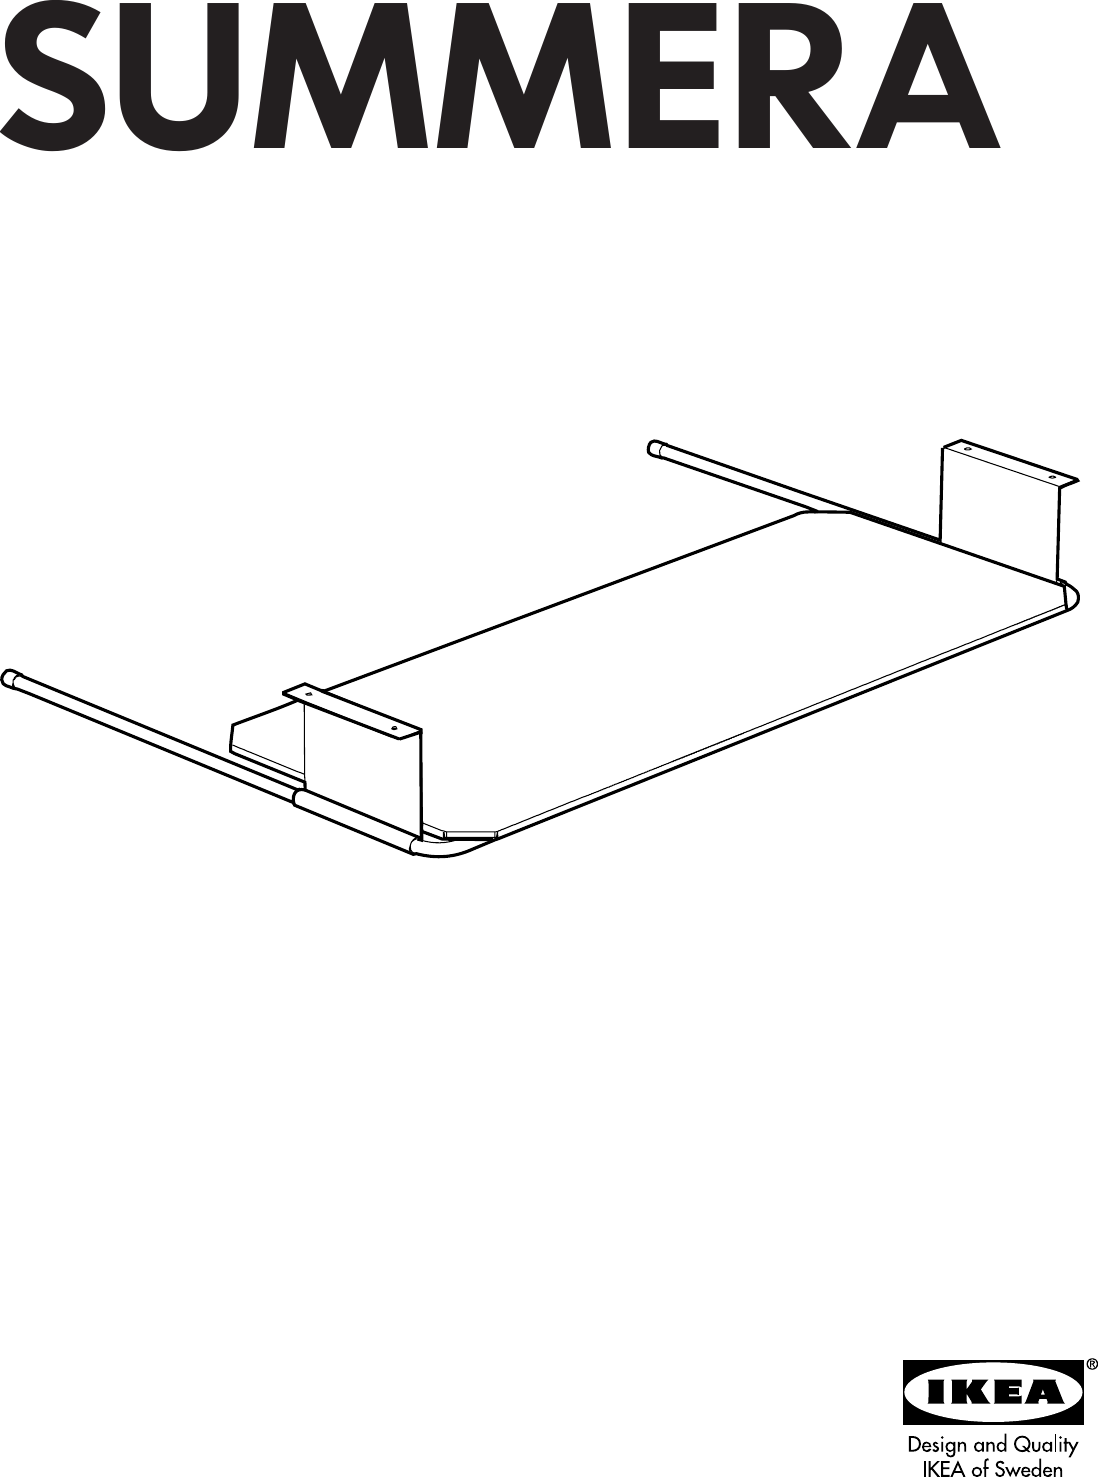 Page 1 of 8 - Ikea Ikea-Summera-Pull-Out-Keyboard-Shelf-Assembly-Instruction